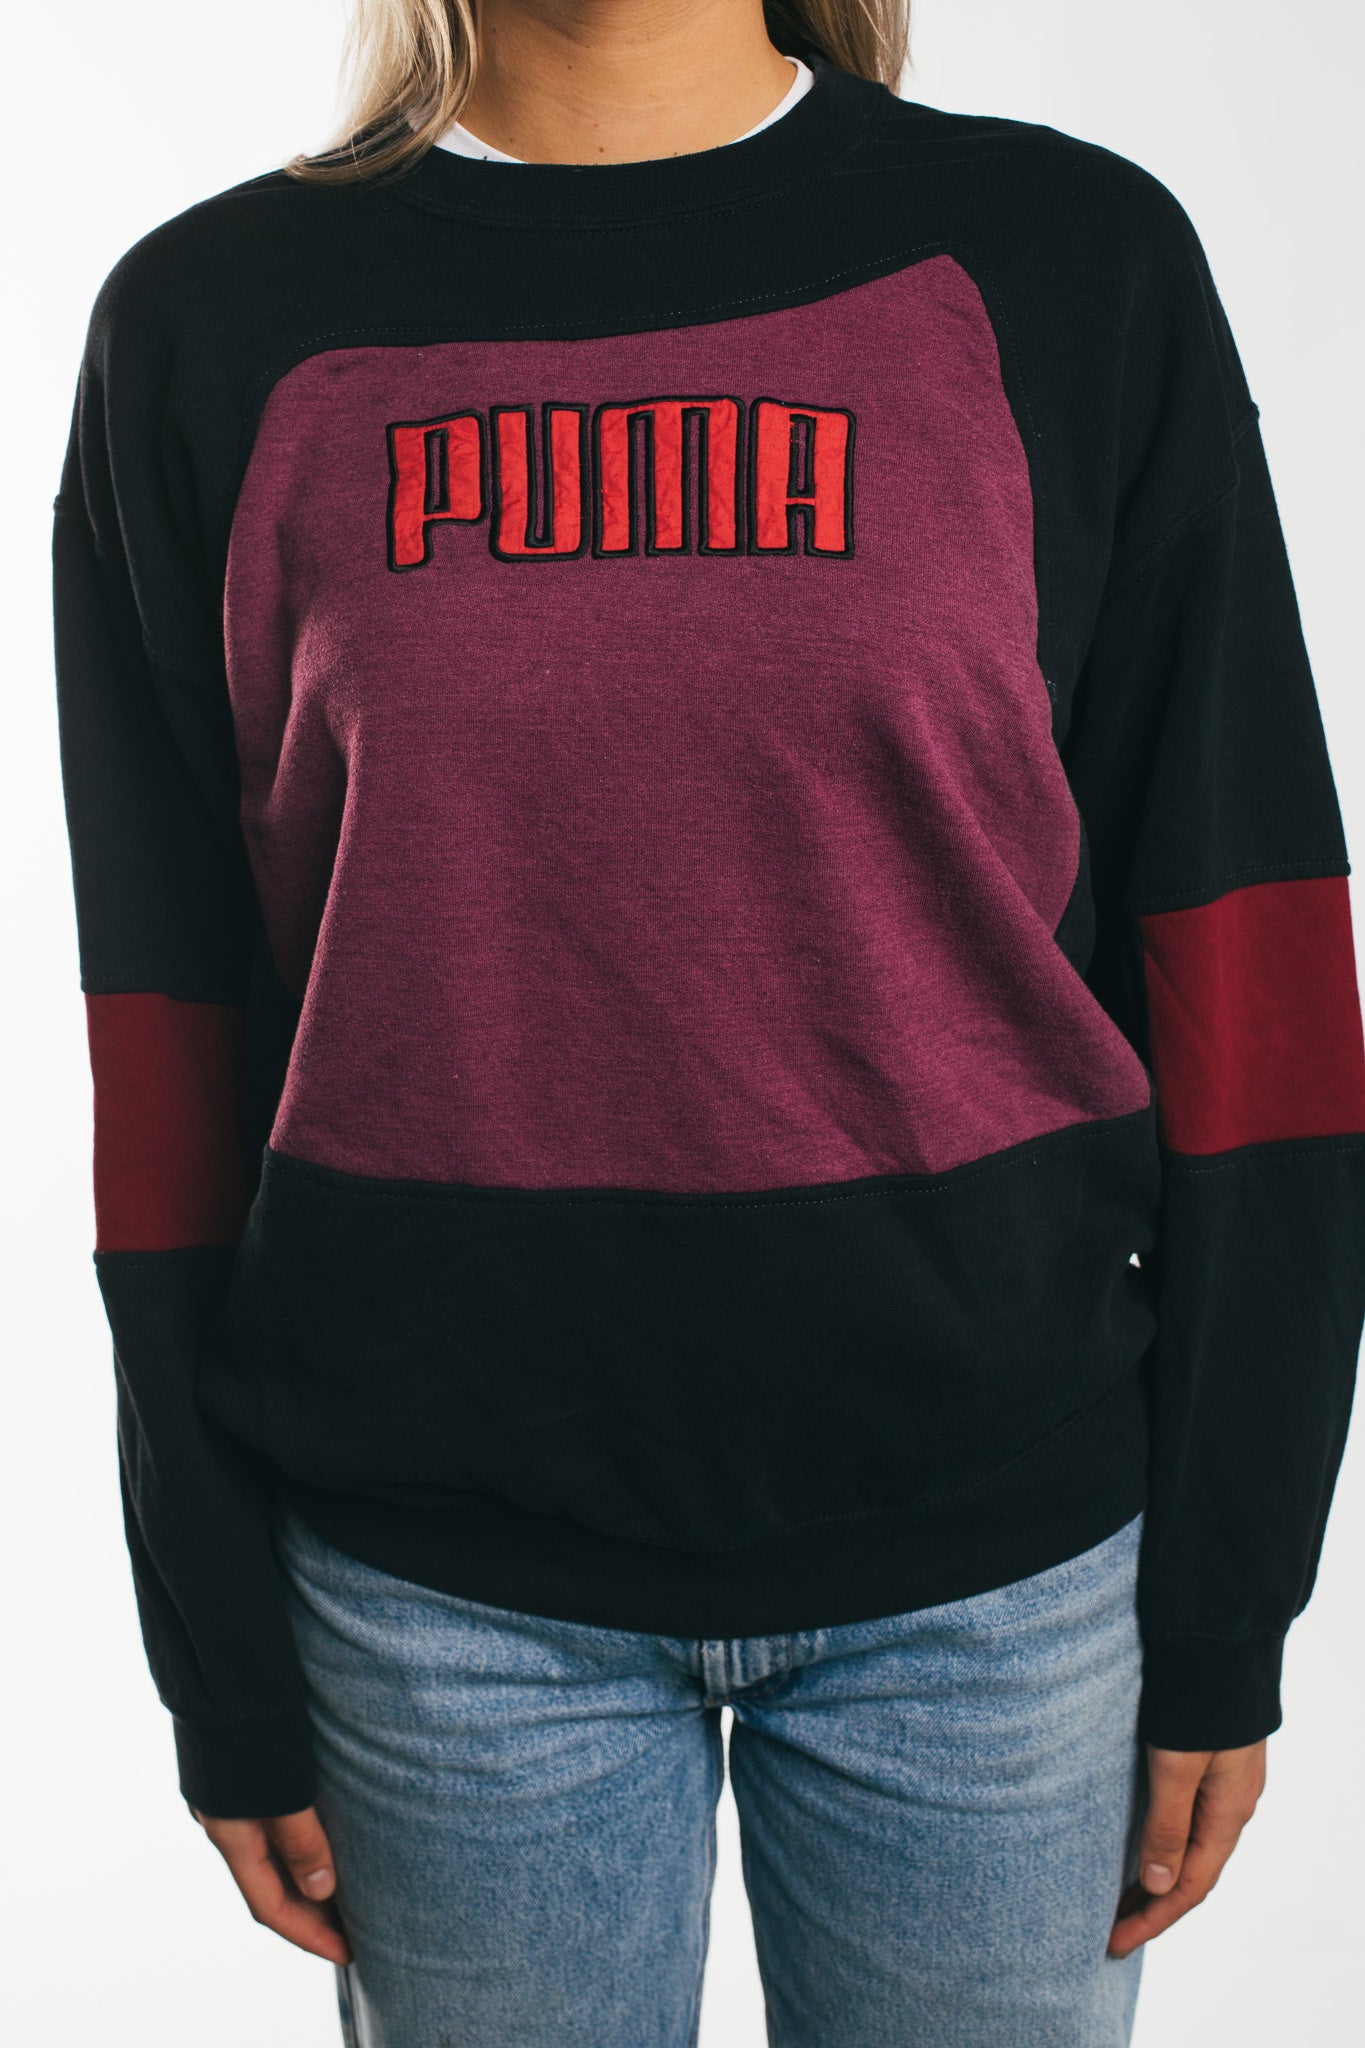 Puma  - Sweatshirt (M)